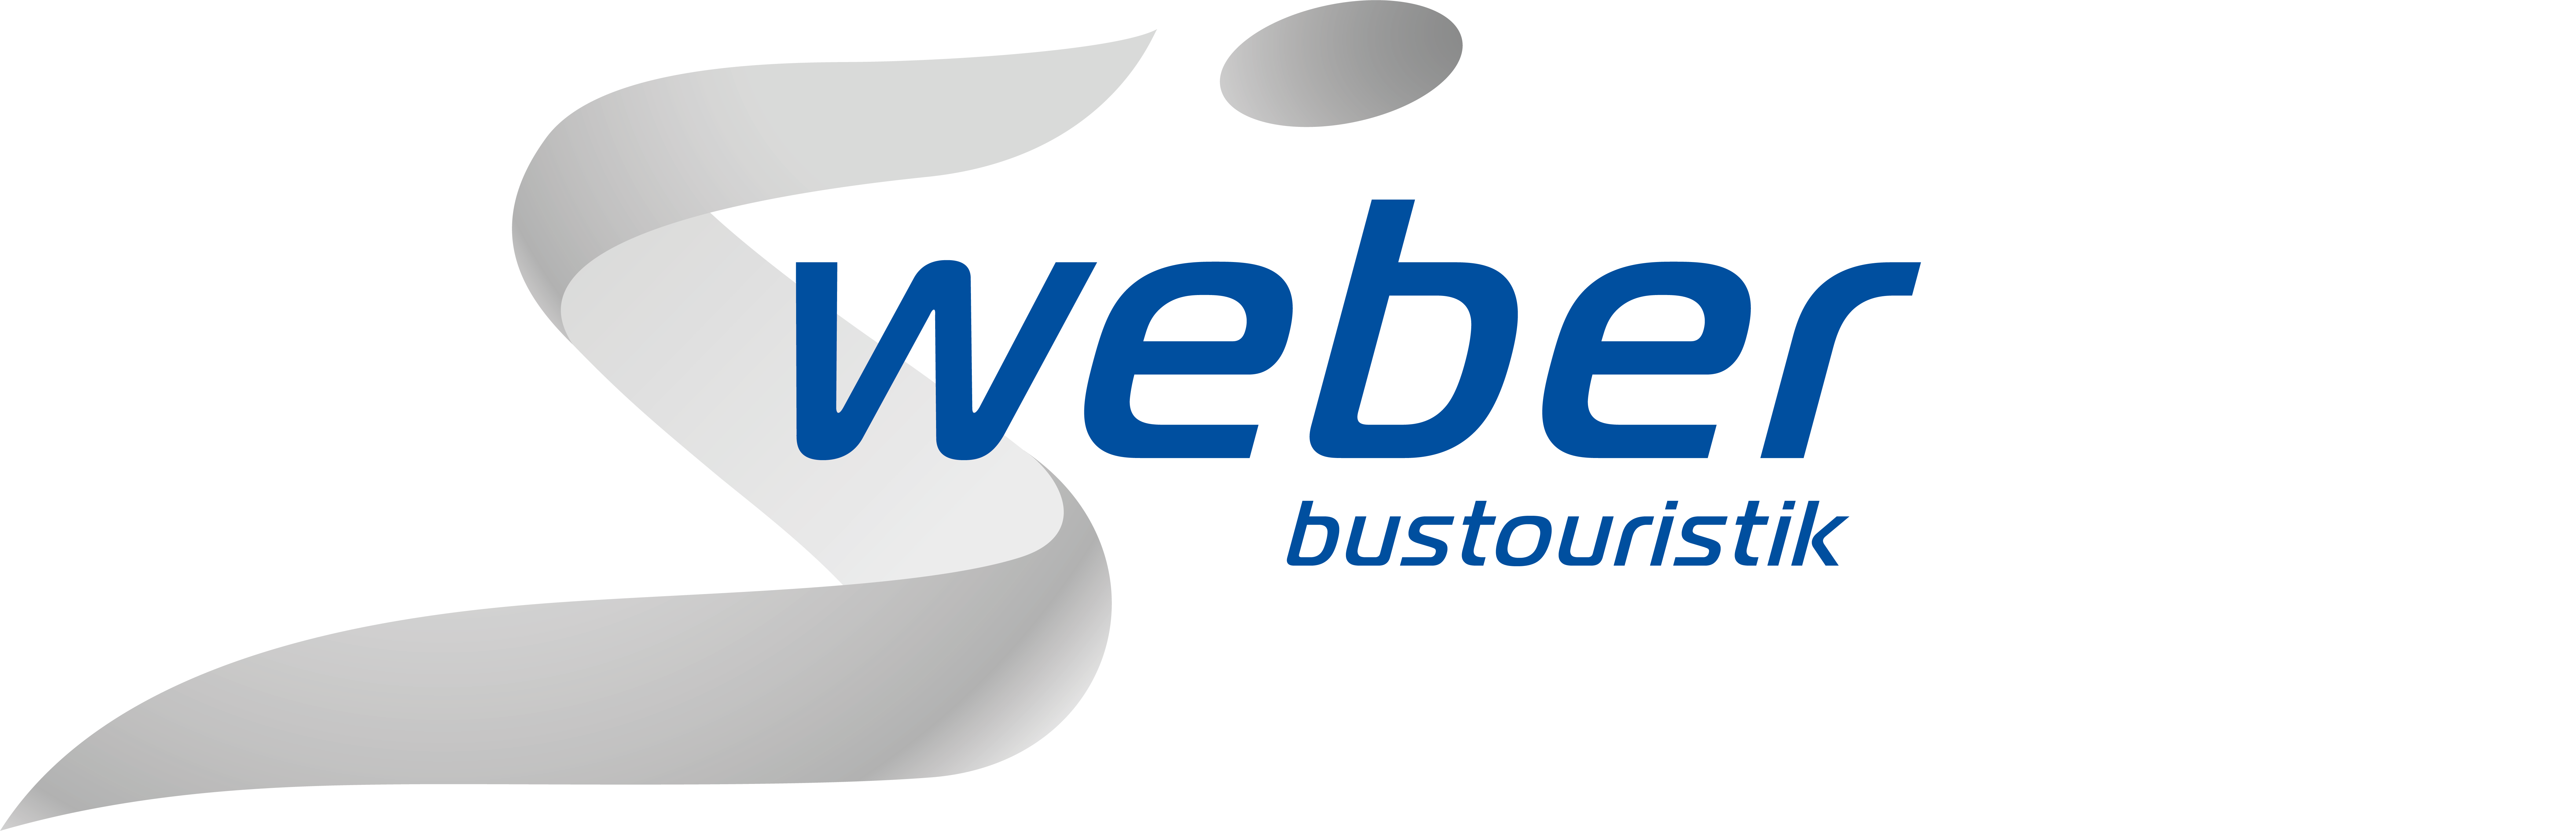 Weber Bustouristik - Logo